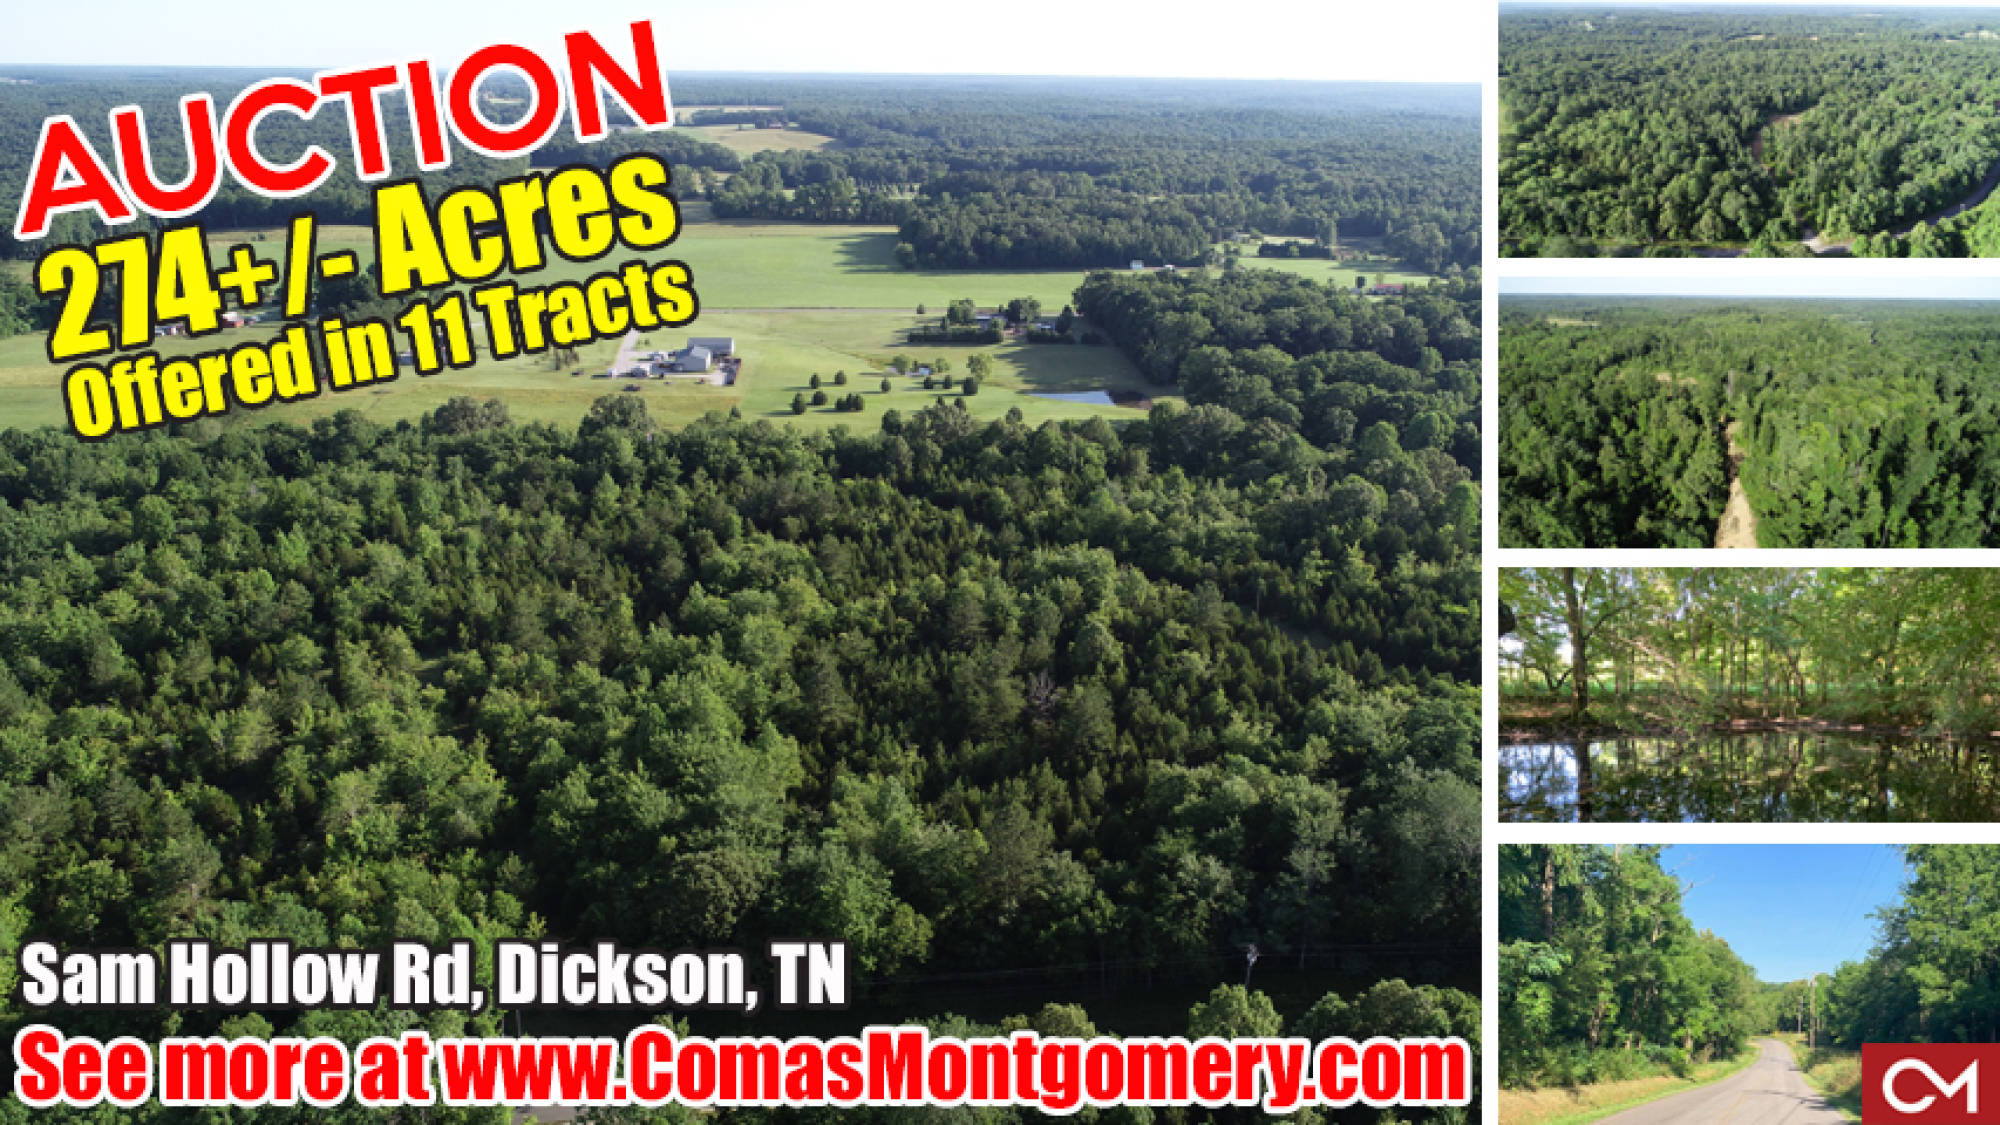 Land, Farm, Acres, For Sale, Dickson, Tennessee, Real Estate, Auction, Build, New Home, Soil Site, Nashville, Comas, Montgomery